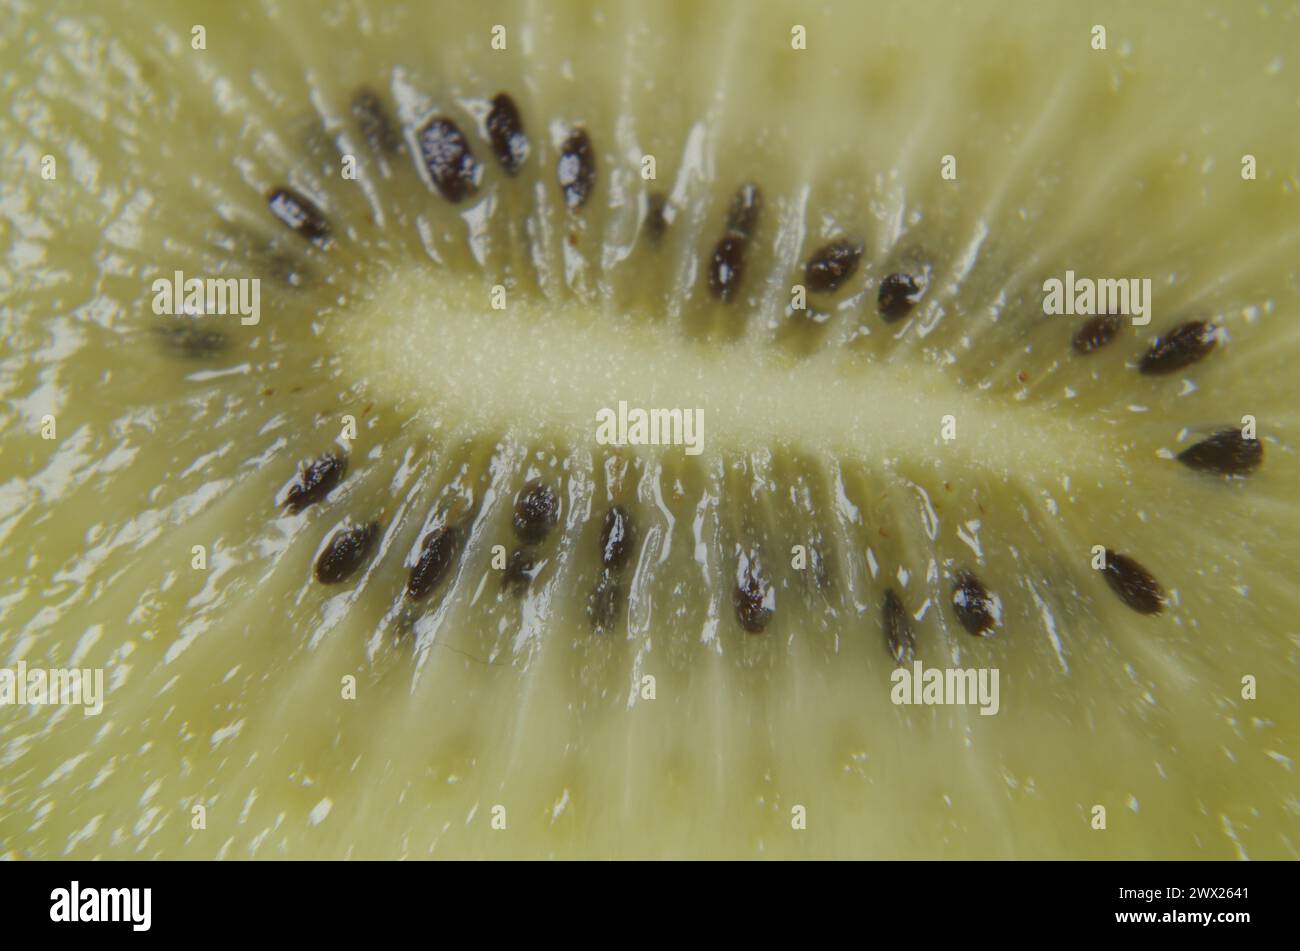 A slice of a kiwi fruit in macro shot. Stock Photo